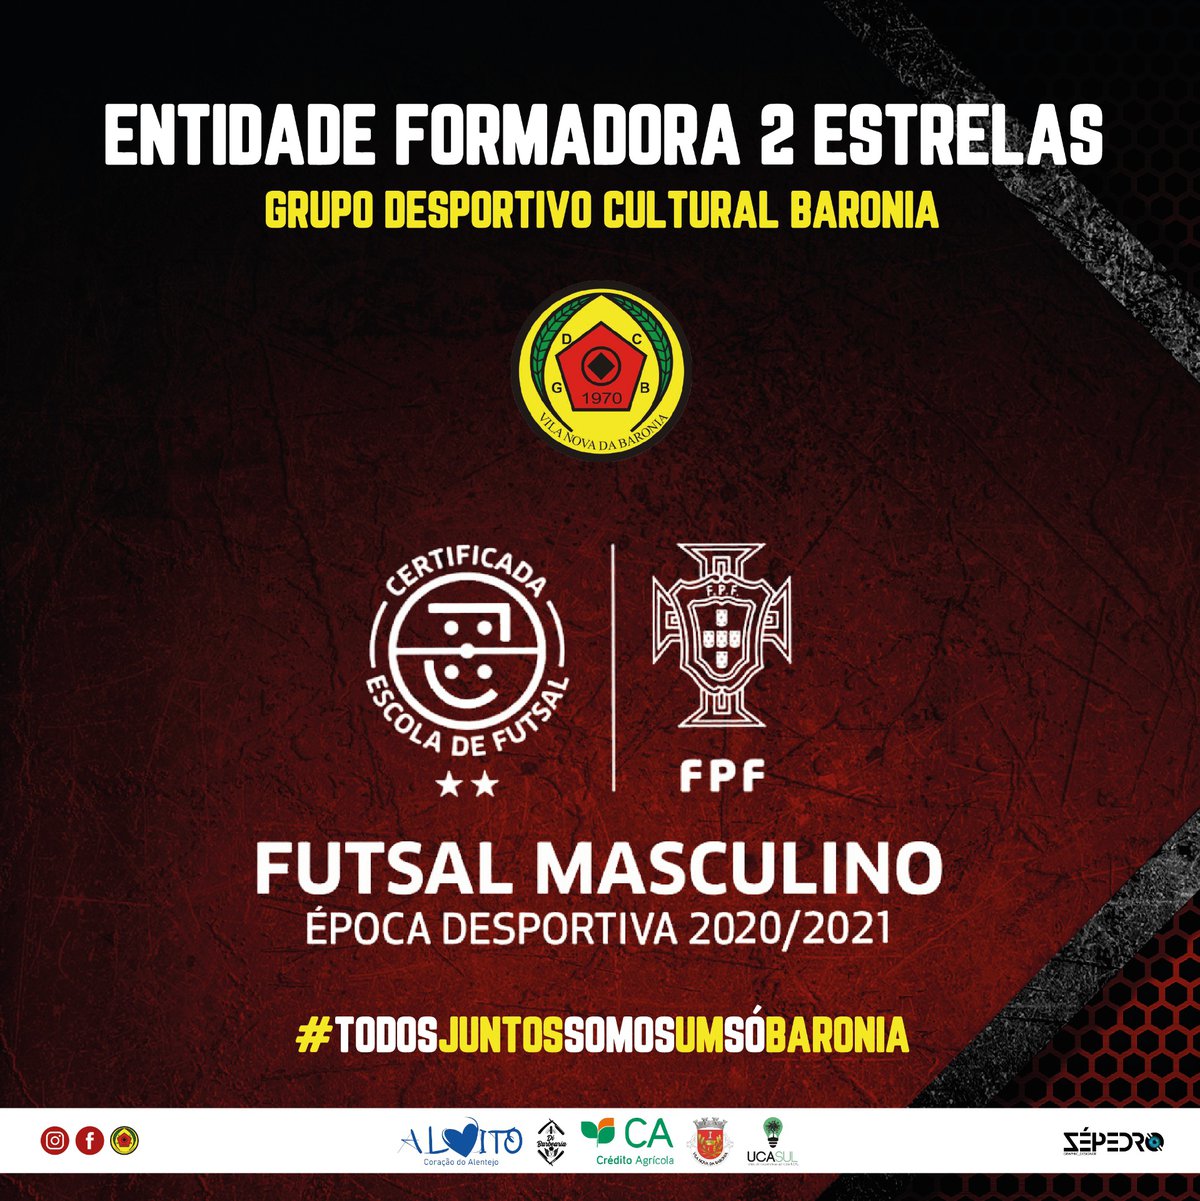 Baronia reconquista o estatuto de Escola de Futsal 2 estrelas